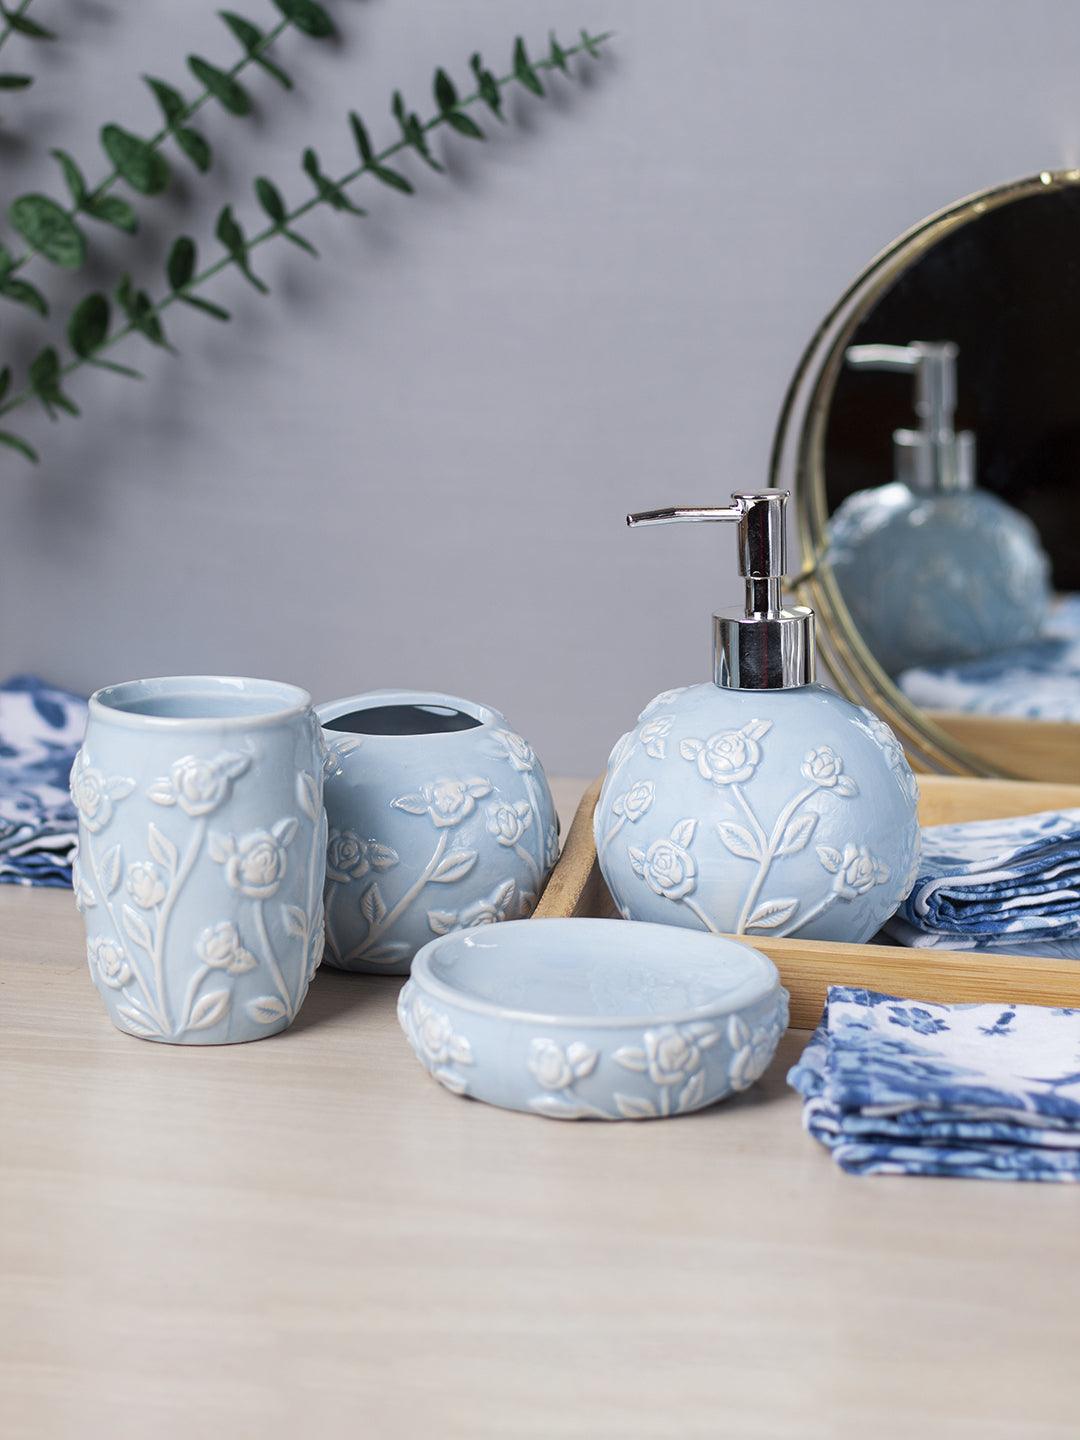 Blue Ceramic Bathroom Set Of 4 - Floral Design, Bath Accessories - 1